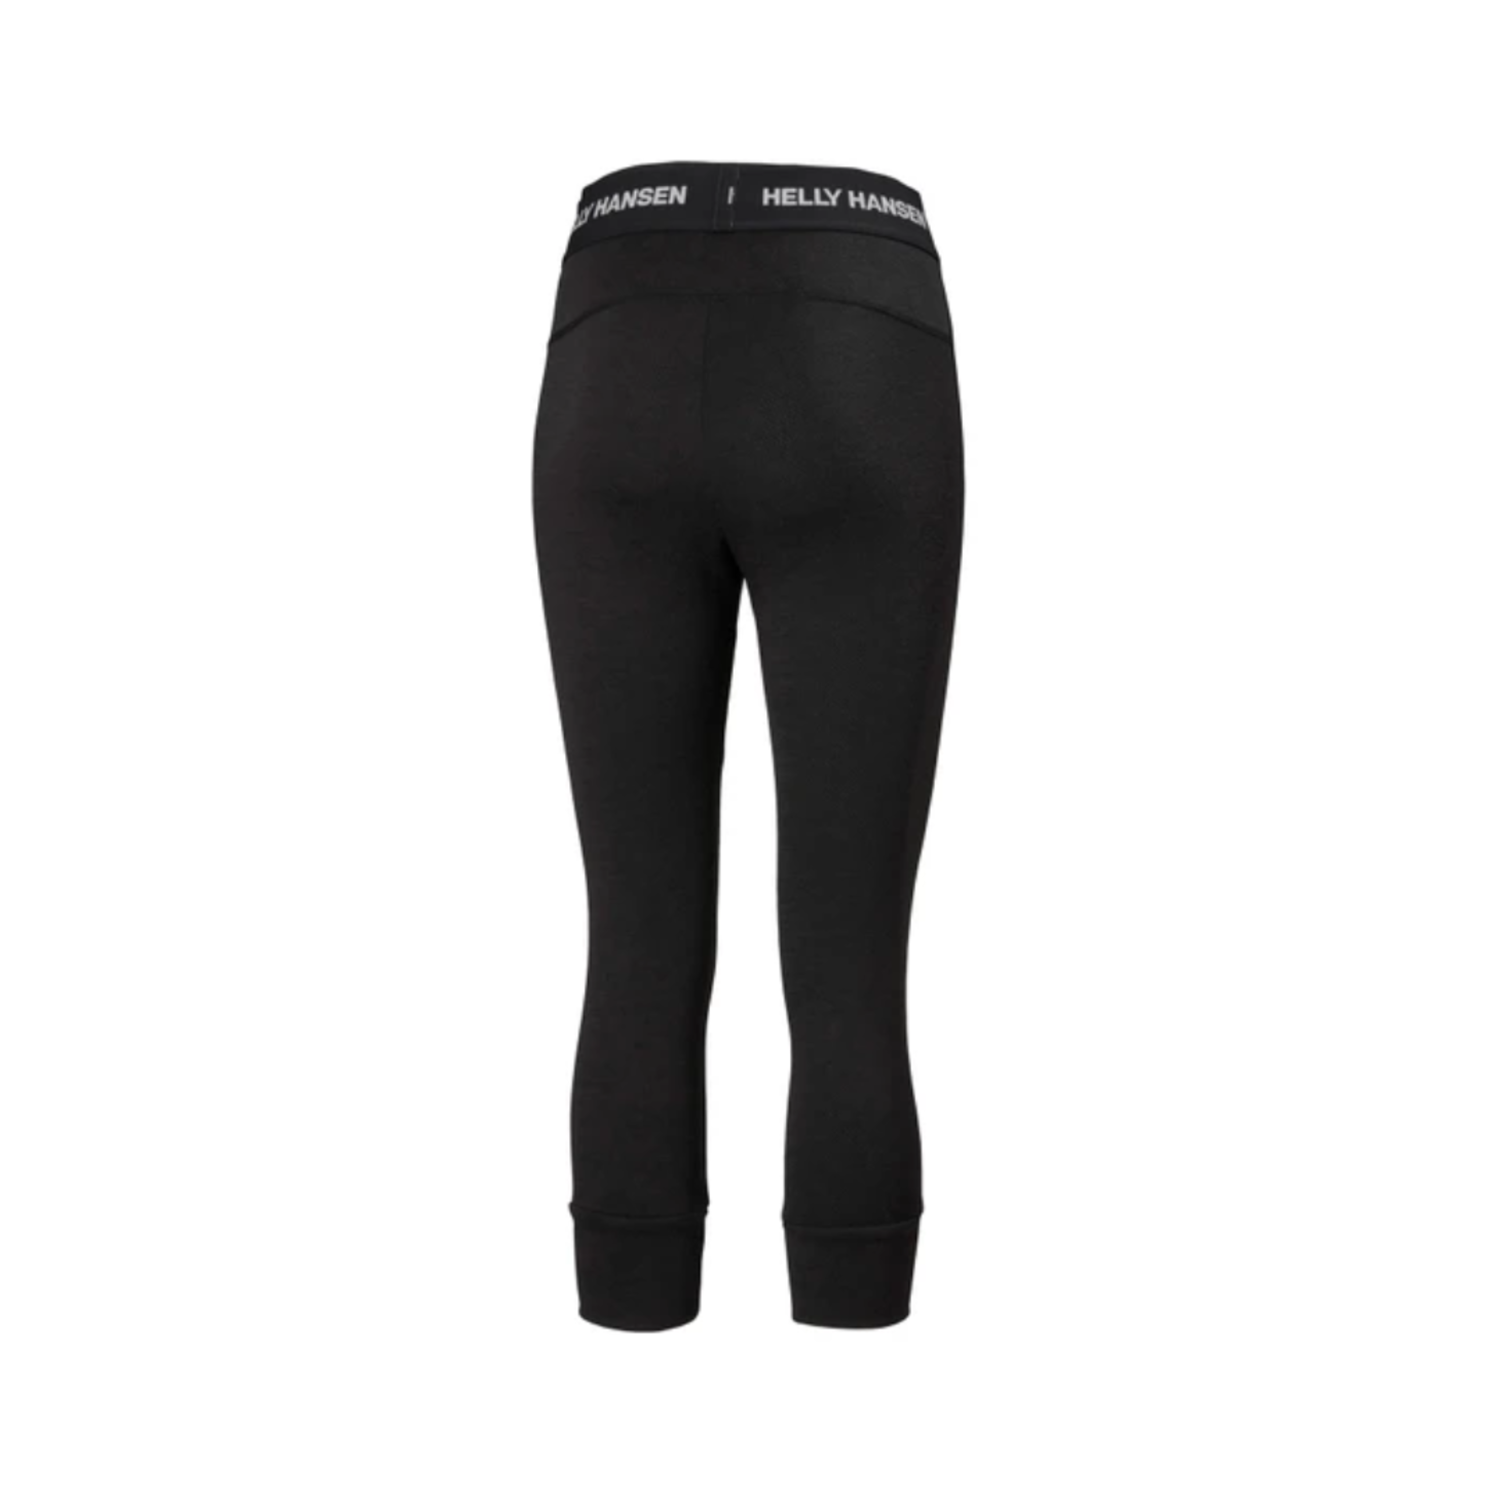 HH MERINO MIDWEIGHT Women's Baselayer 3/4 pants - Boutique Les Sommets